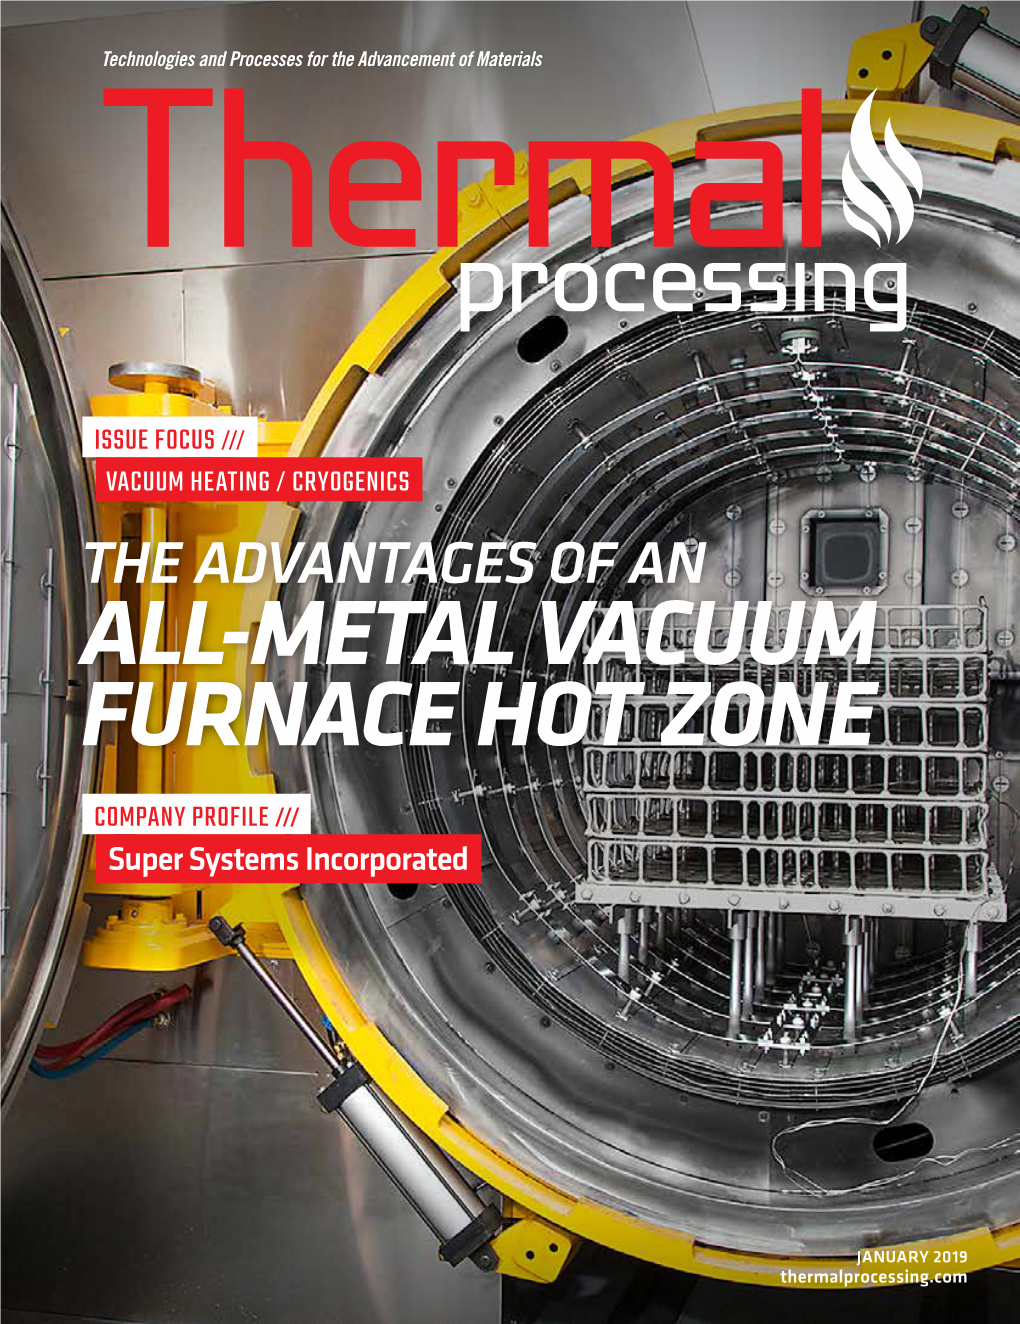 All-Metal Vacuum Furnace Hot Zone